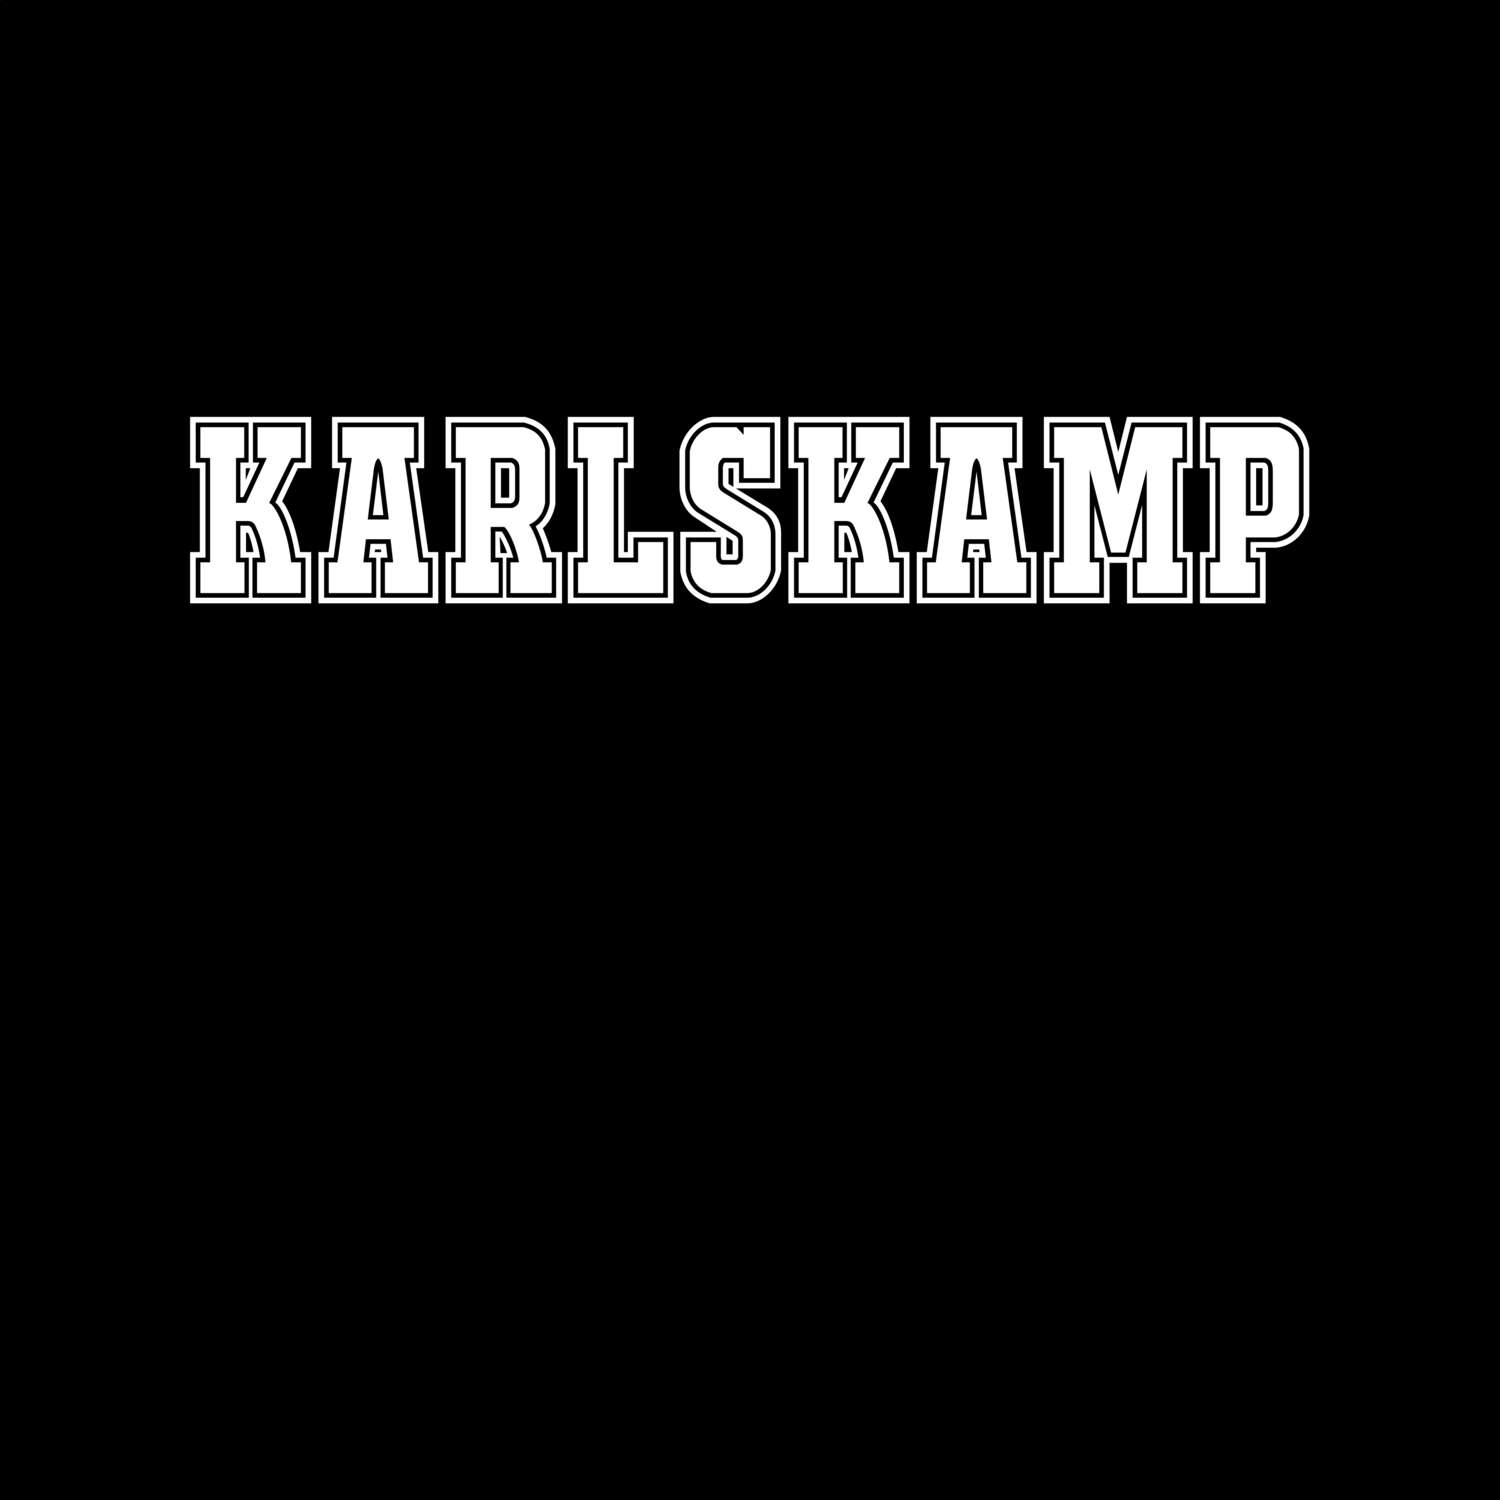 Karlskamp T-Shirt »Classic«